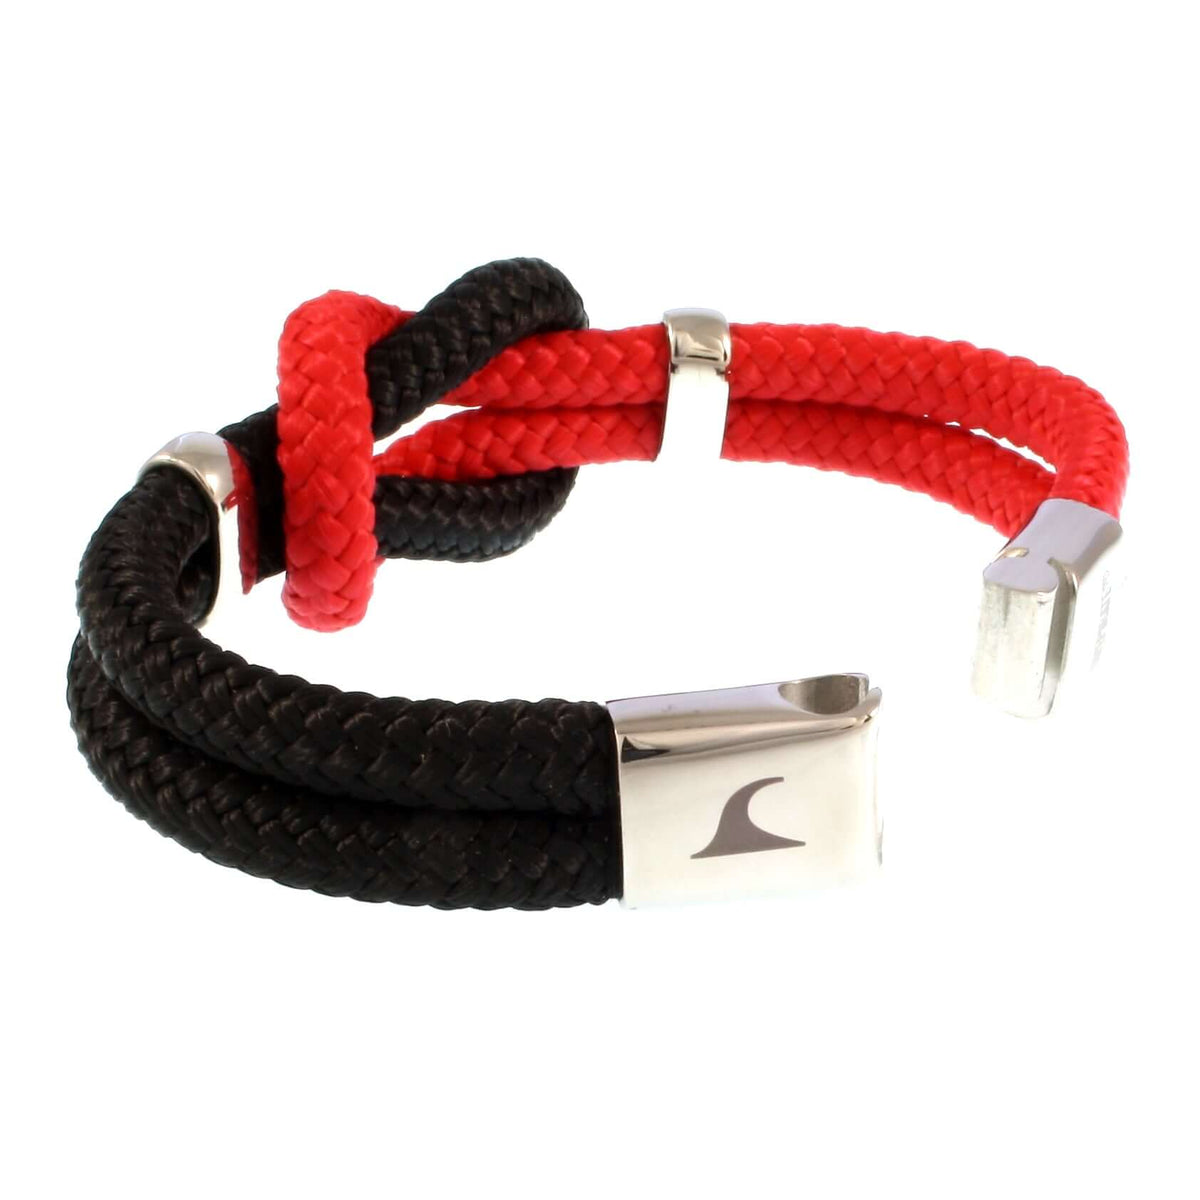 Damen-Segeltau-armband-pure-schwarz-rot-silber-geflochten-Edelstahlverschluss-offen-wavepirate-shop-st